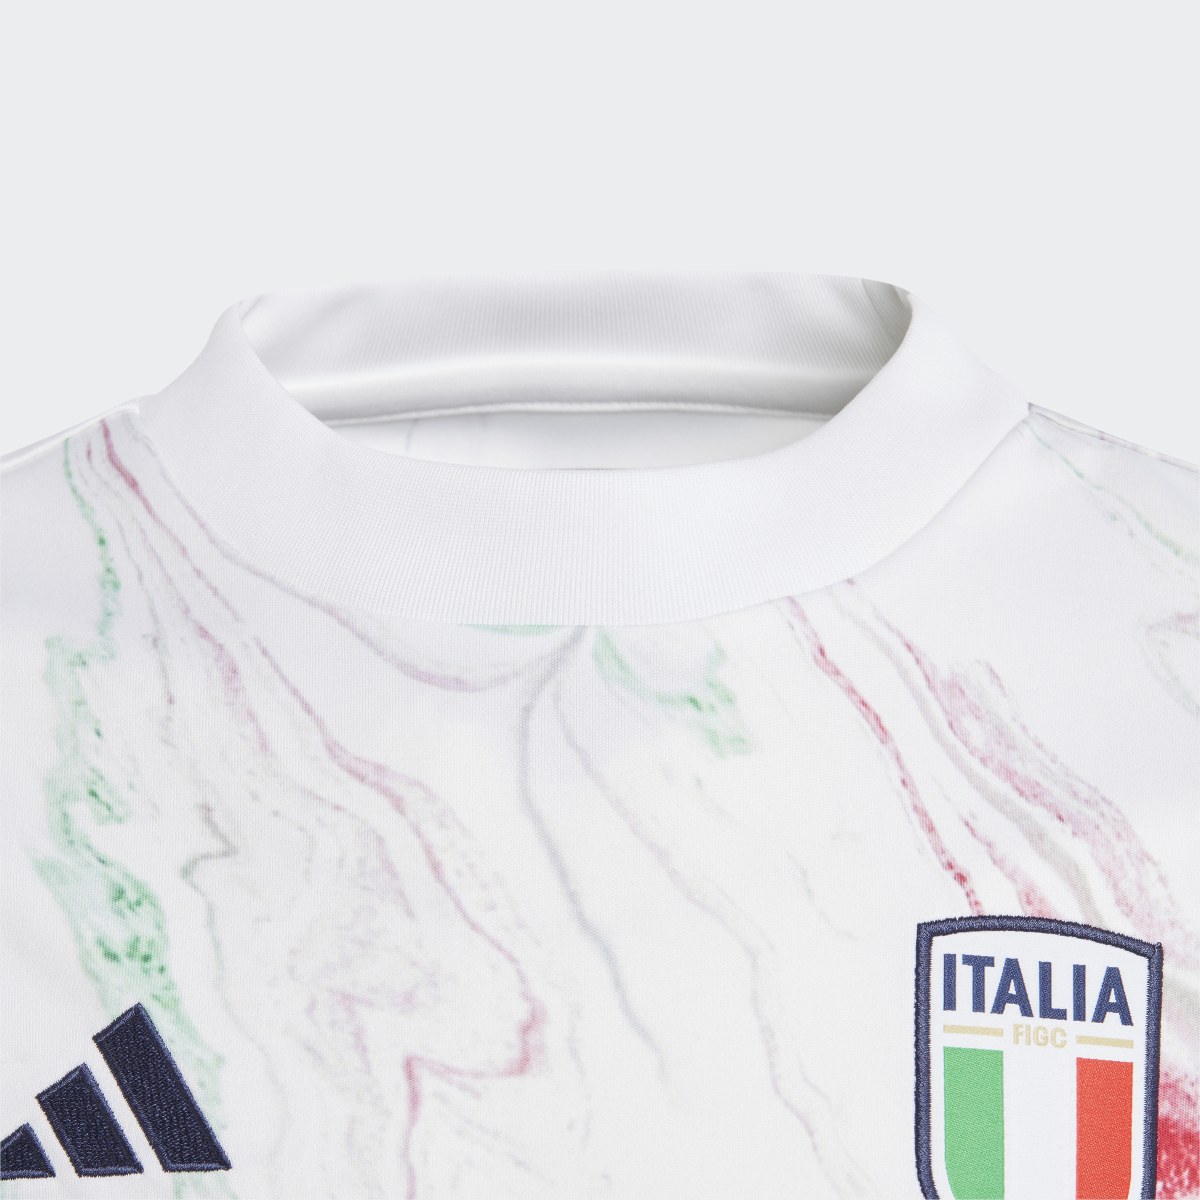 Adidas Italy Pre-Match Jersey. 5